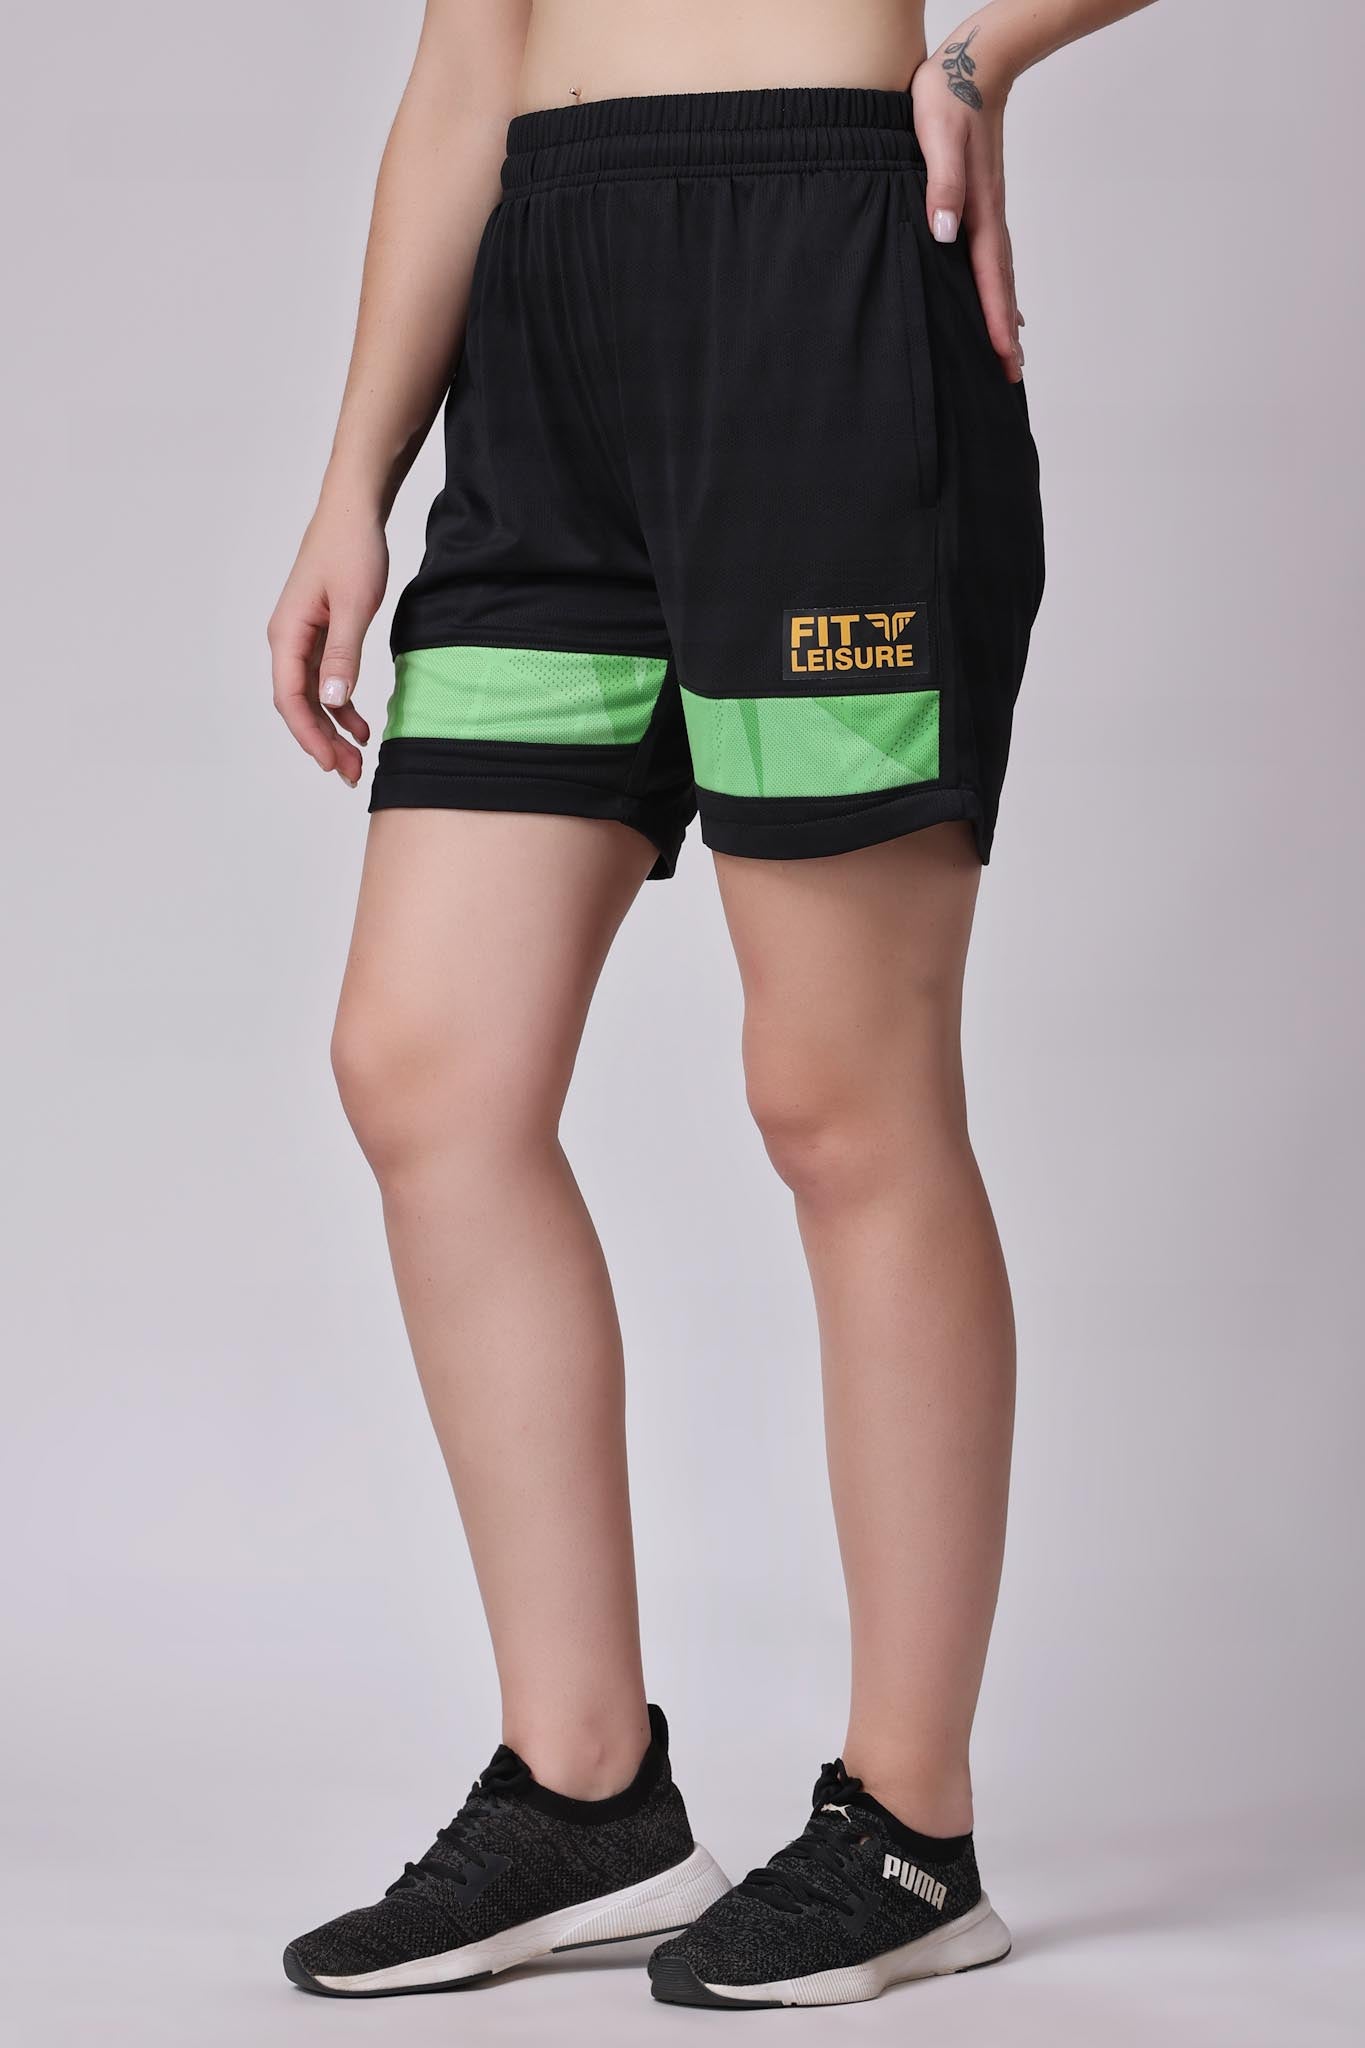 Women's Agate Tennis Shorts - Neon Green